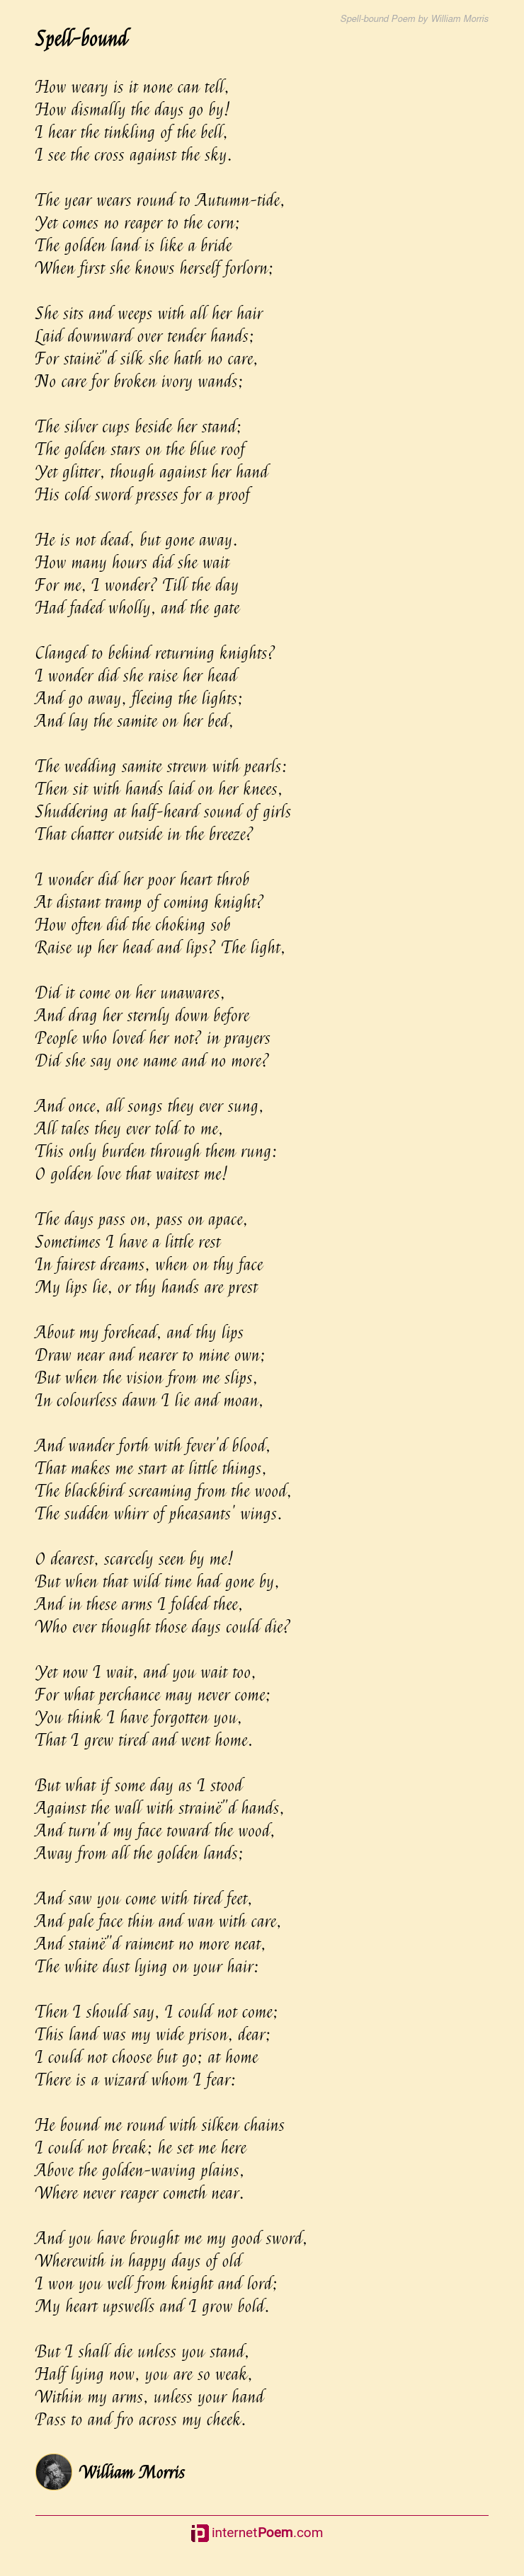 Spell Bound Poem By William Morris